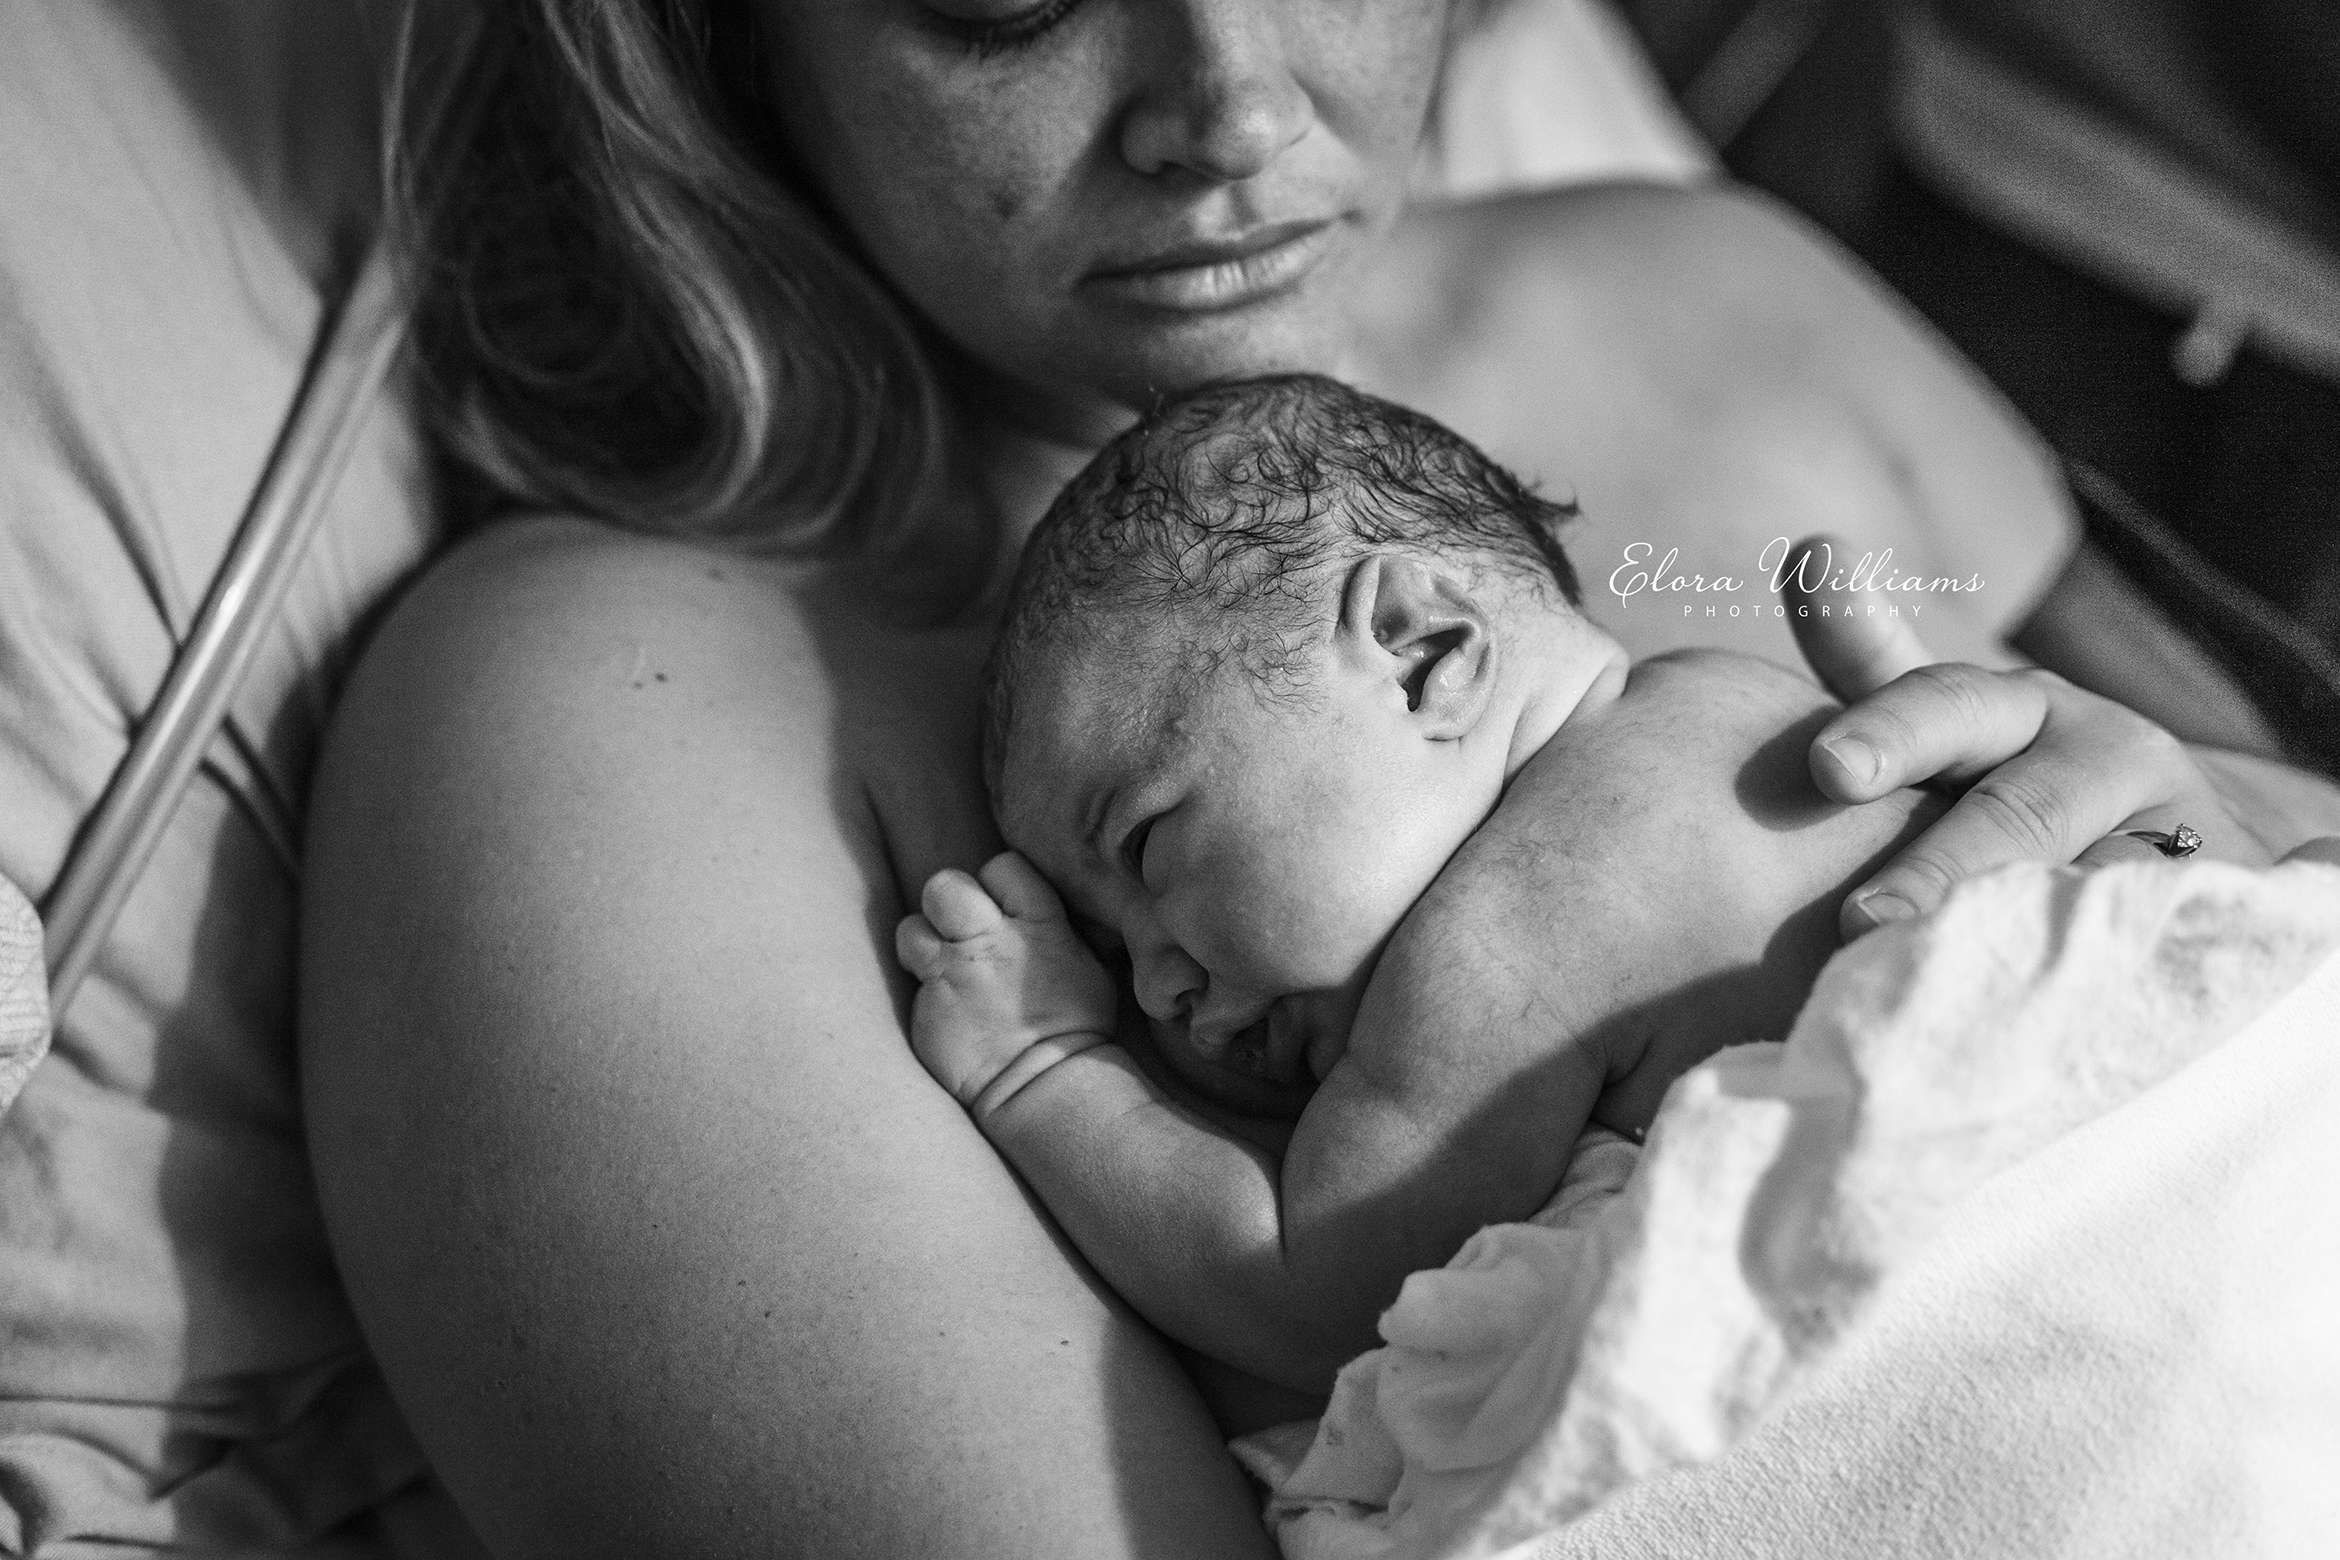 Birth Photography  |  Elora Williams Photography